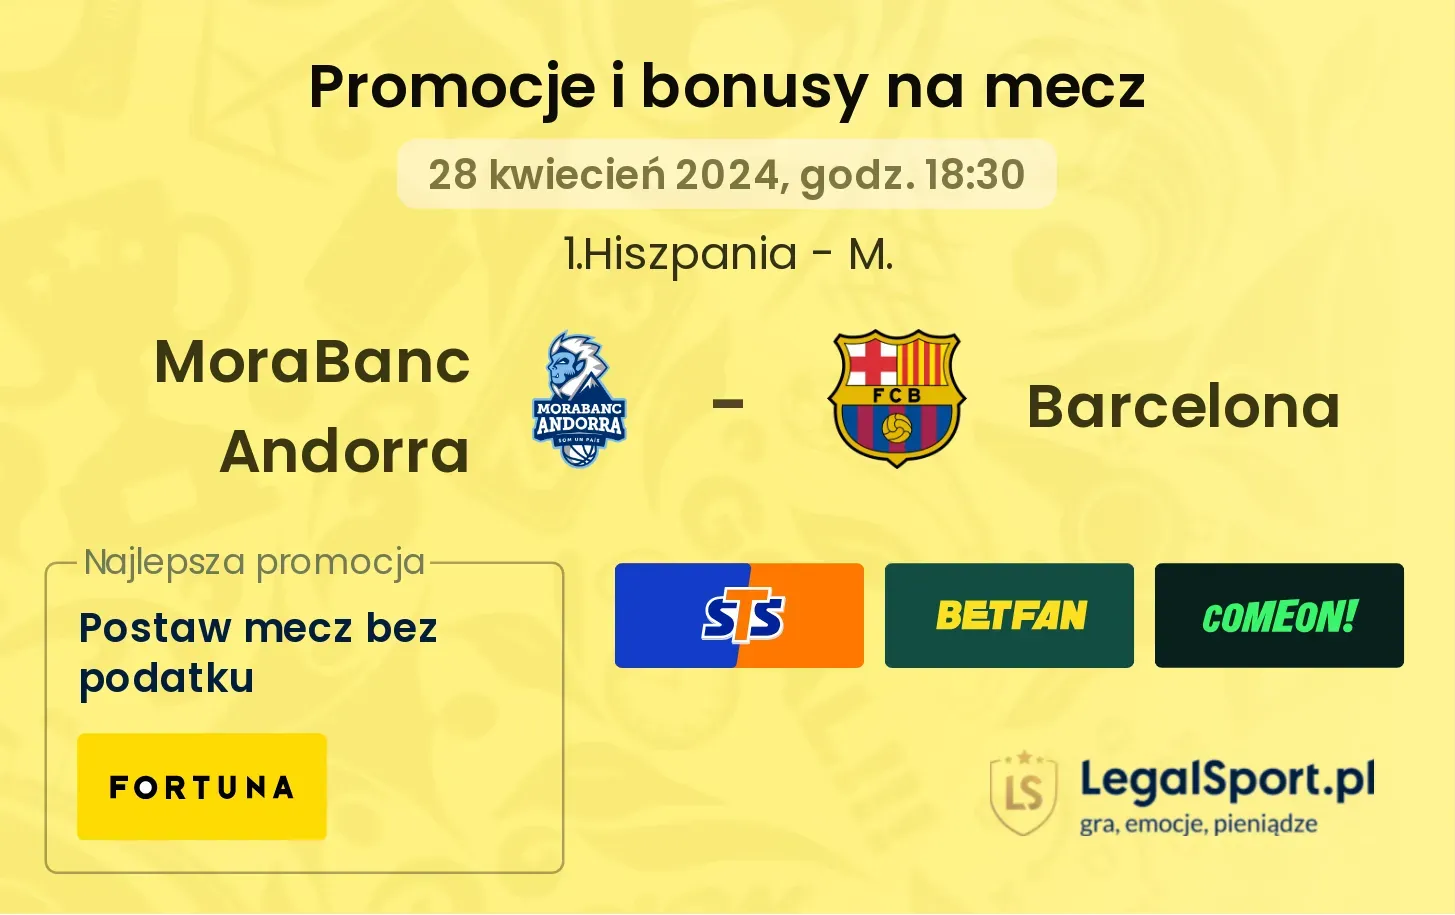 MoraBanc Andorra - Barcelona promocje bonusy na mecz